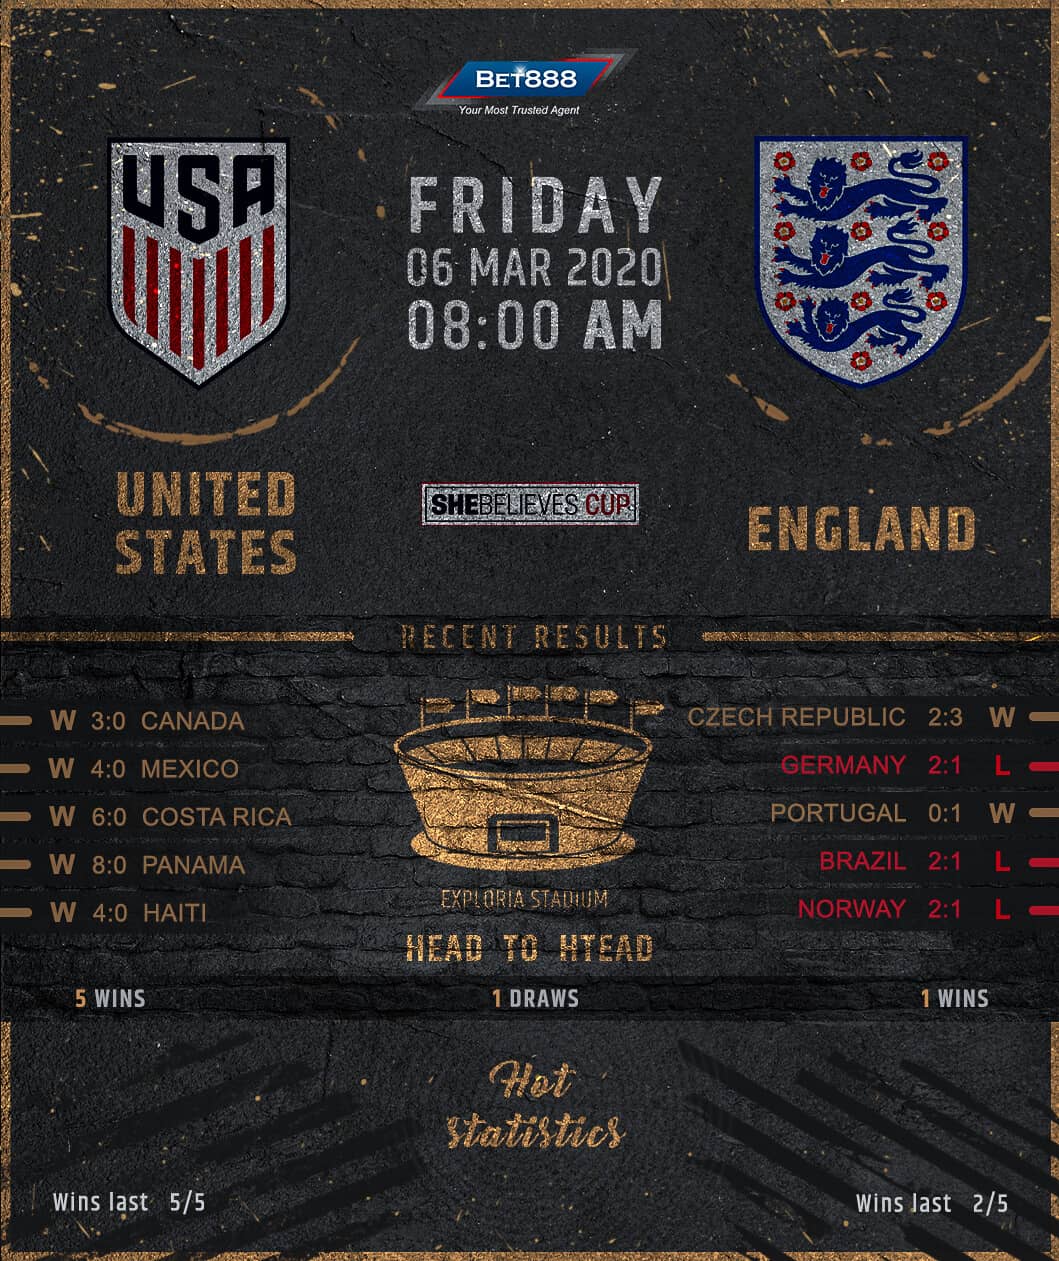 United States vs England 06/03/20